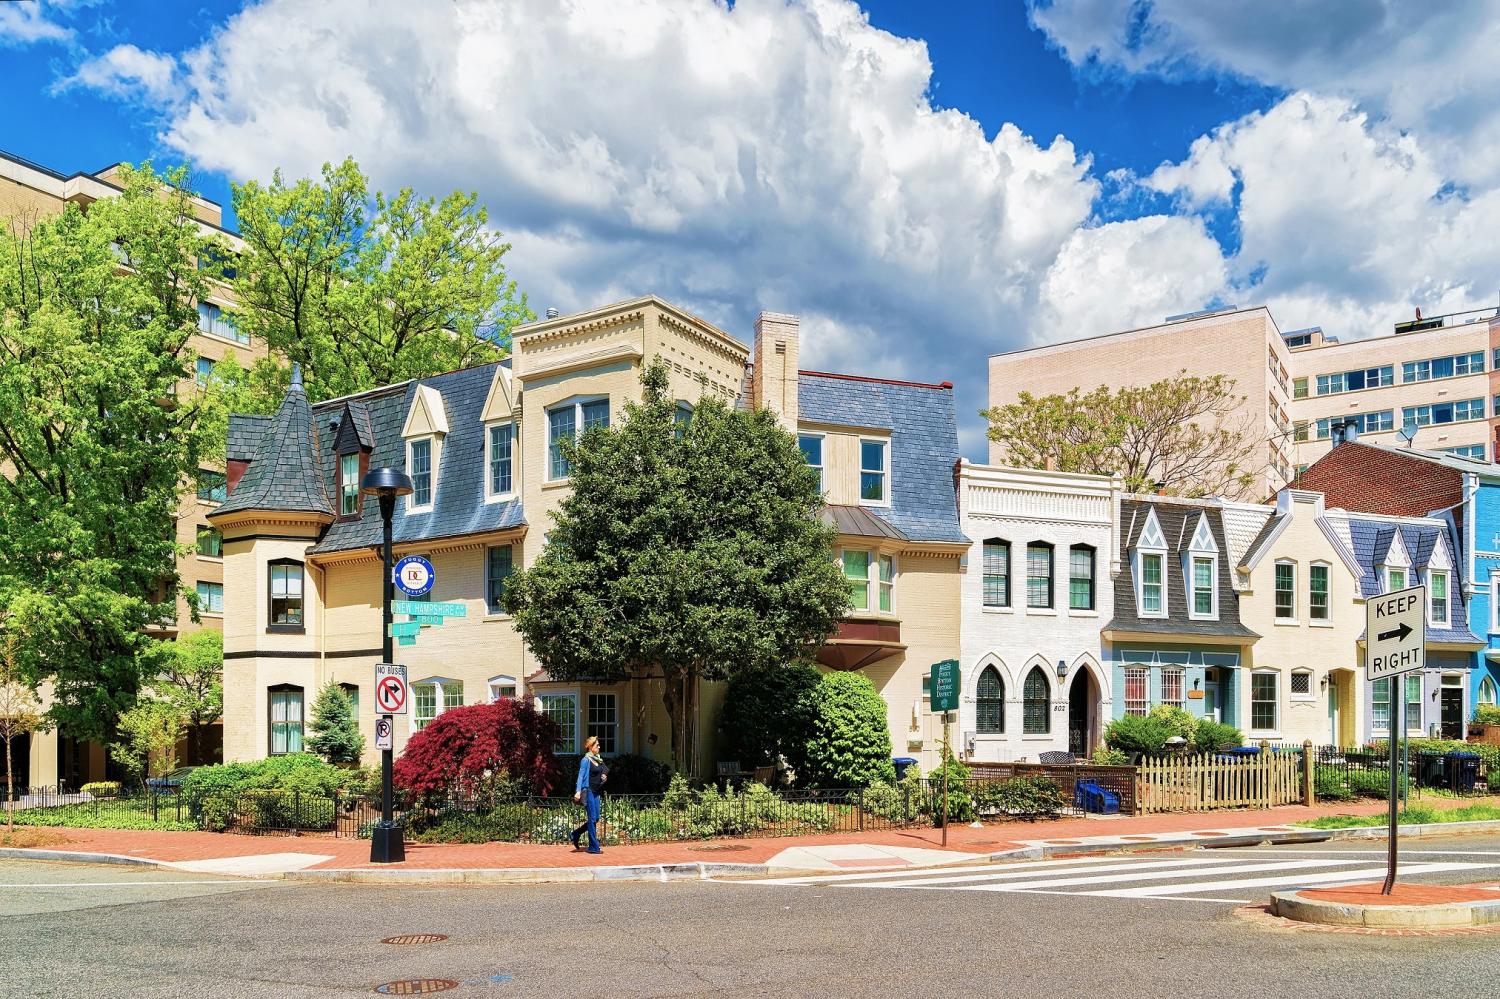 Residential neighborhood in Washington DC